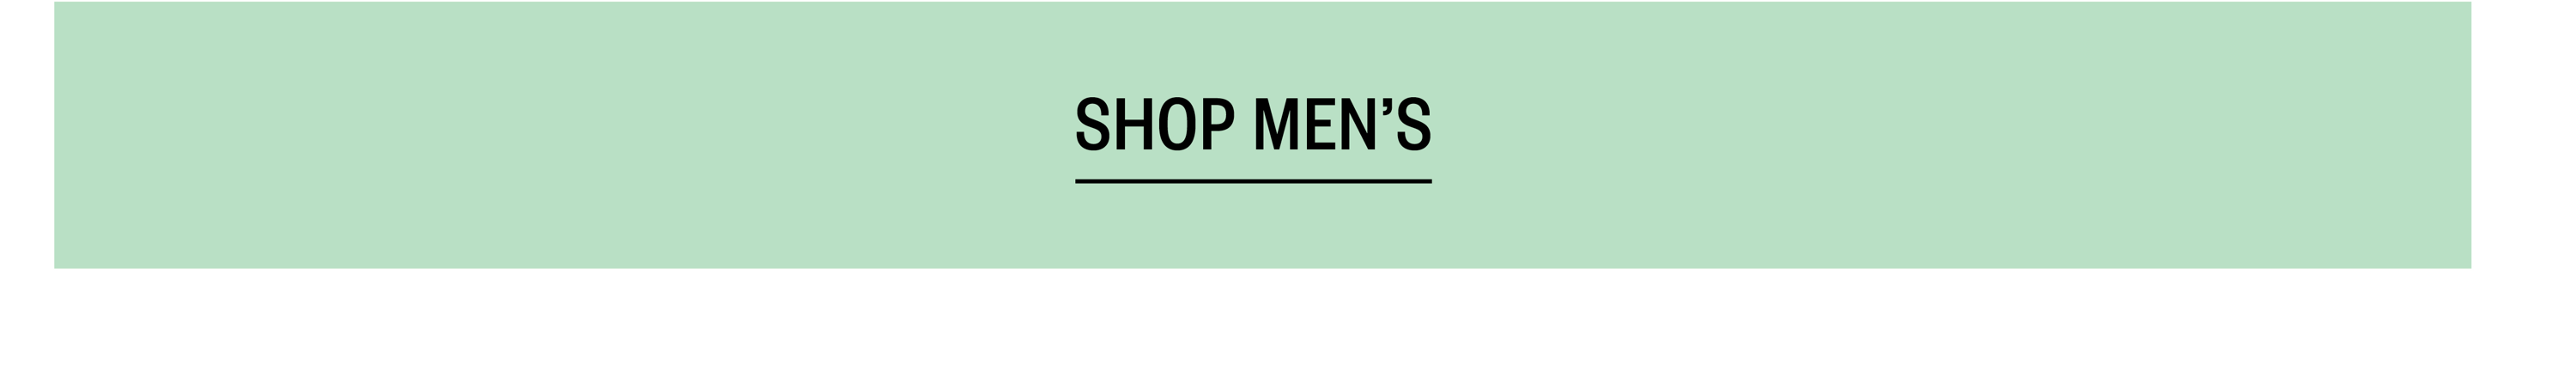 Shop Men's Black Friday Sale